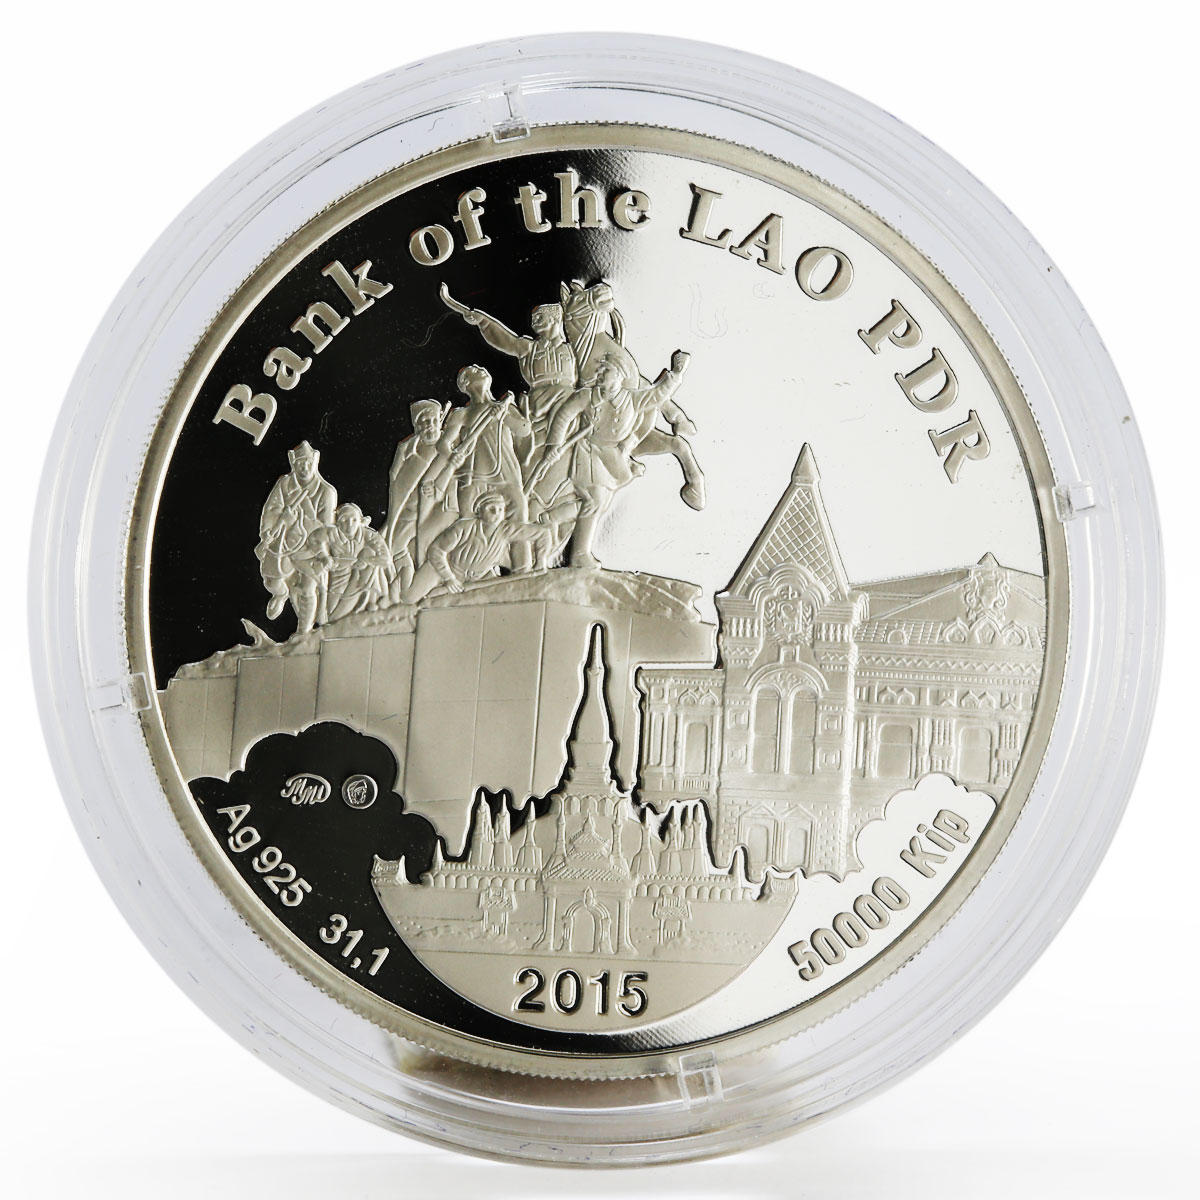 Laos 50000 kip Russian Cities series Samara colored proof silver coin 2015